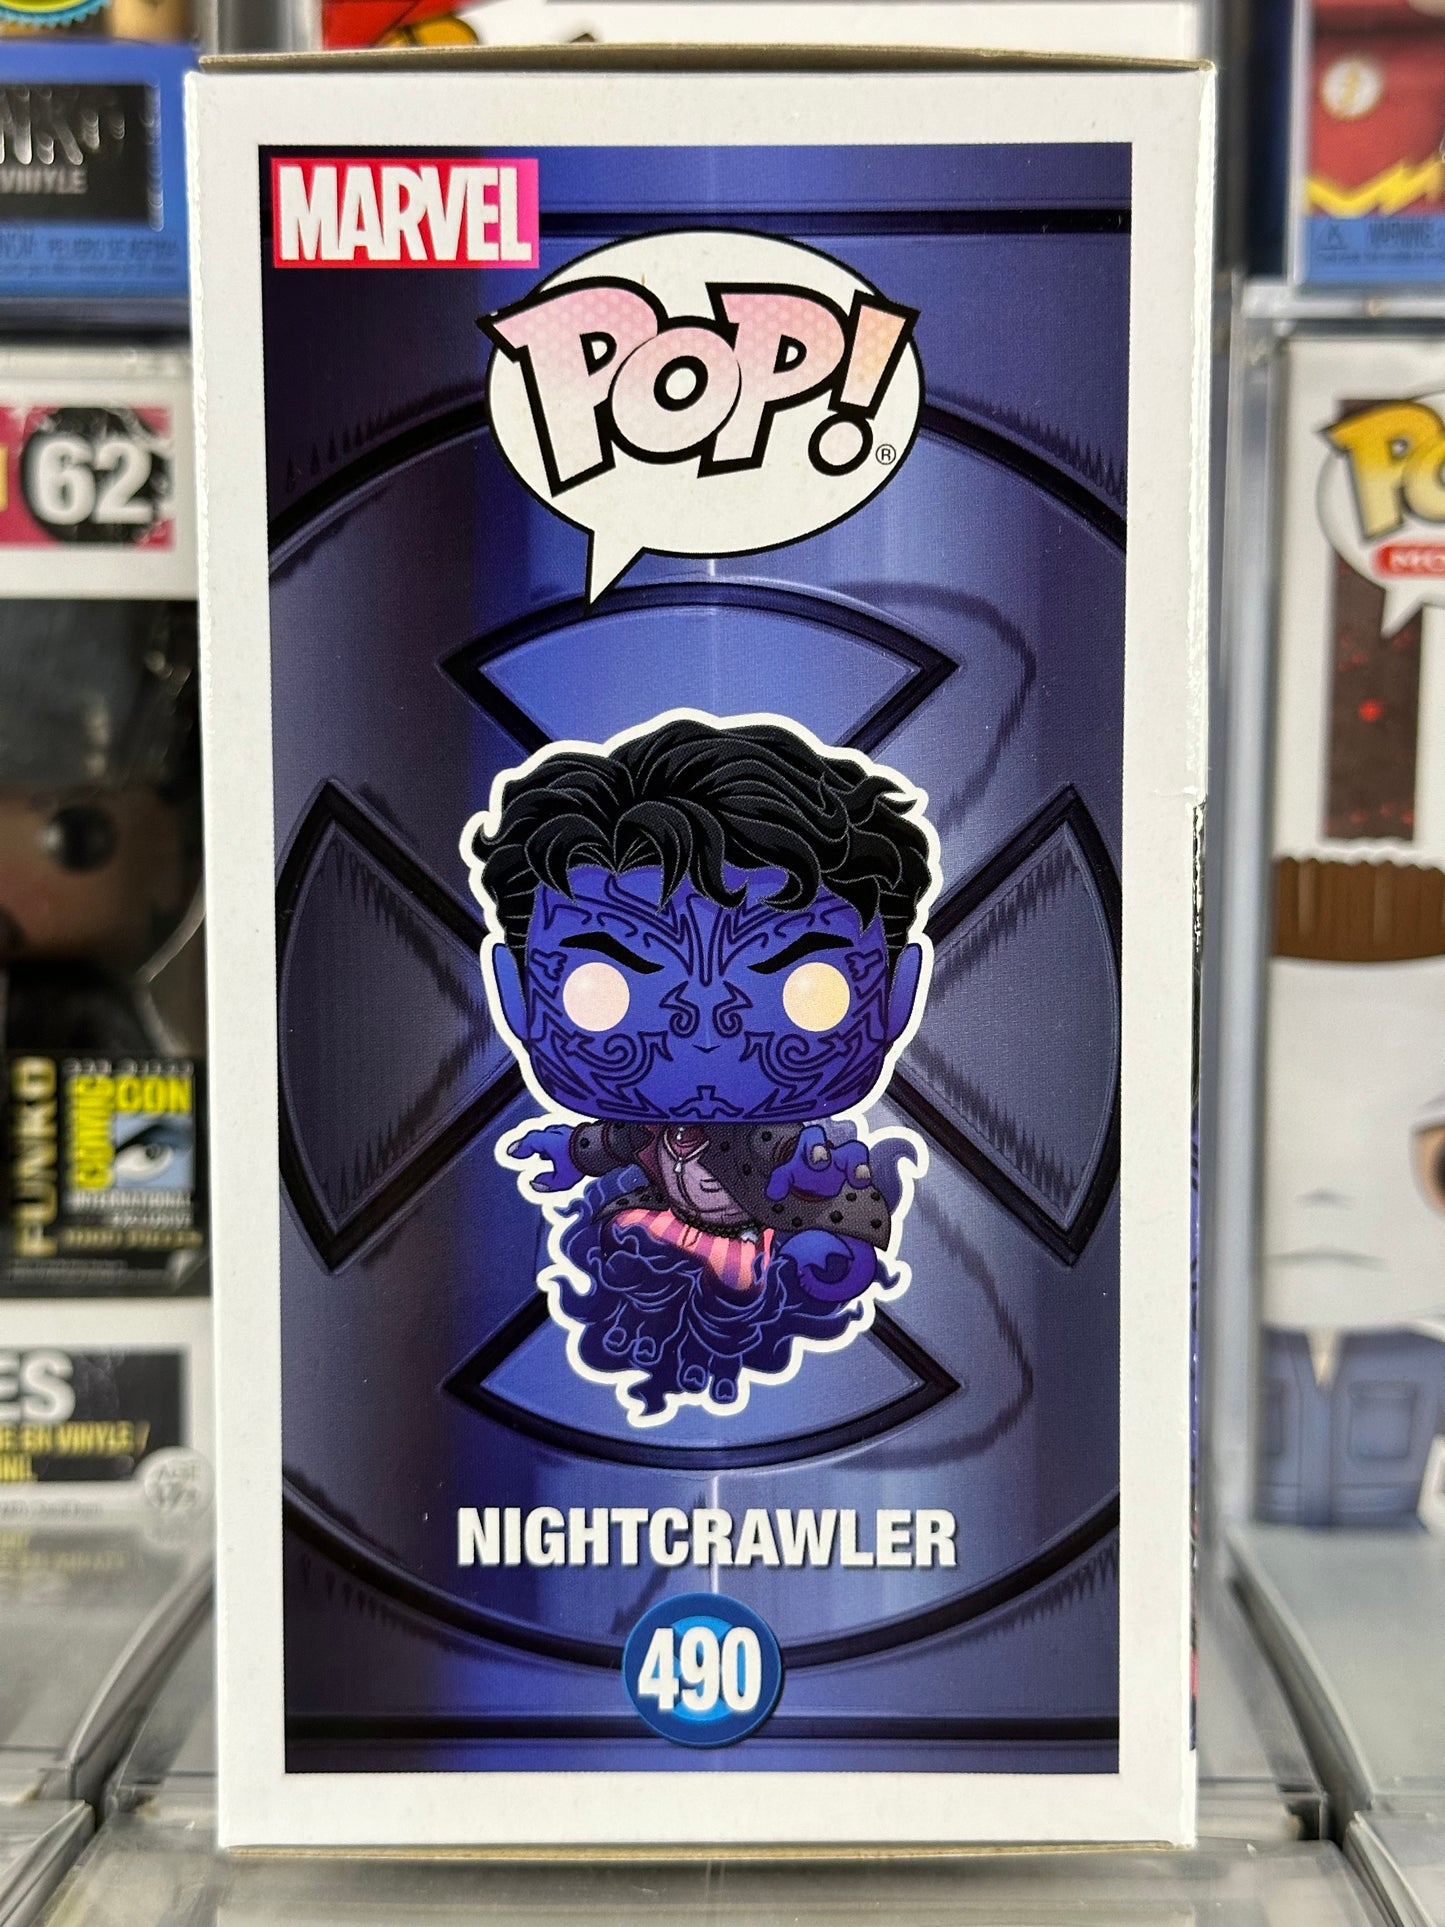 Marvel - Nightcrawler (490) 2020 Summer Convention Exclusive